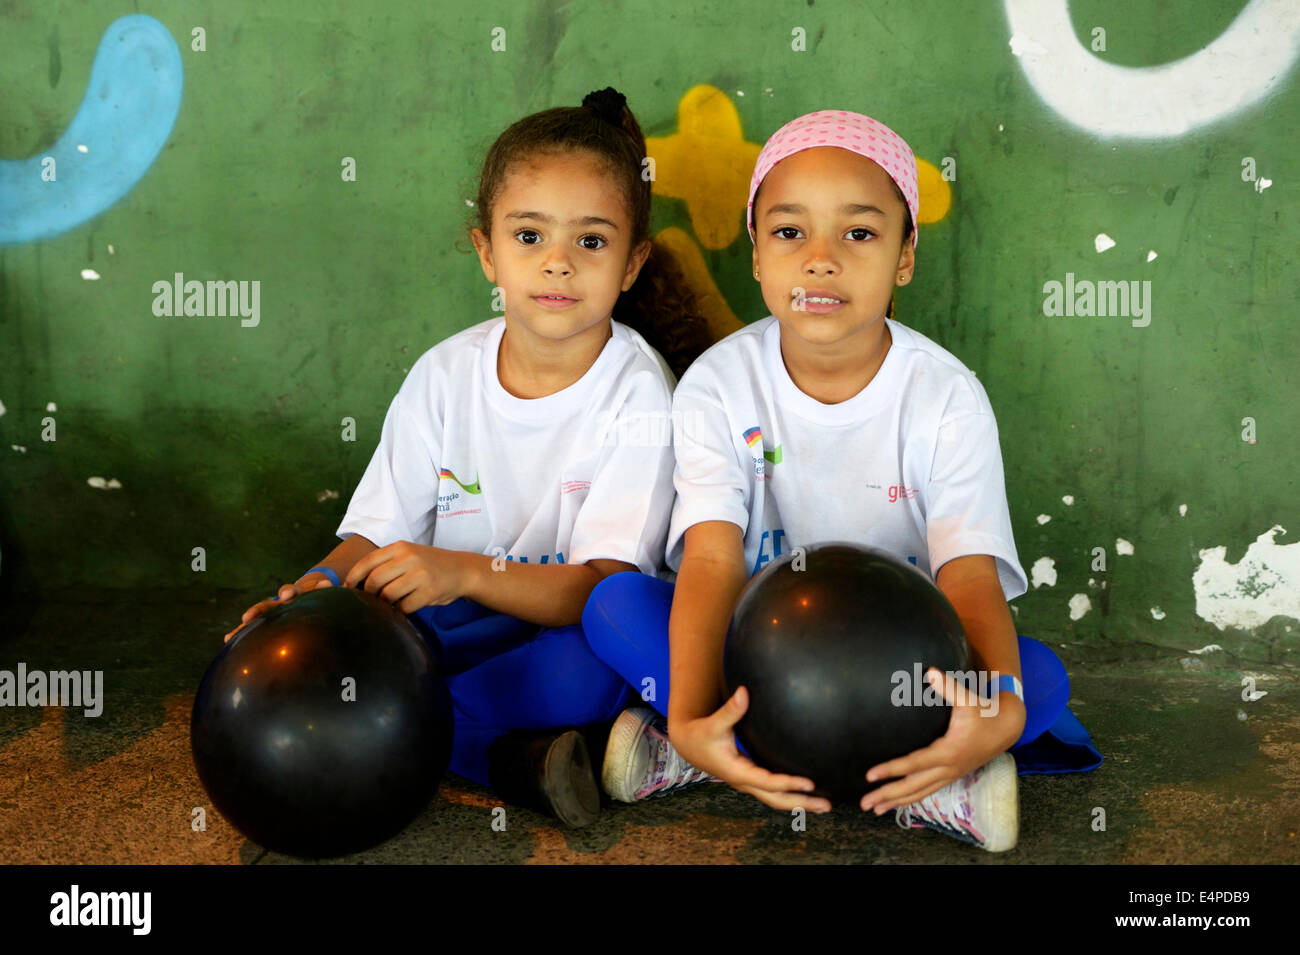 Los niños en un evento deportivo, los barrios, Morro dos Prazeres favela de Río de Janeiro, Brasil Foto de stock